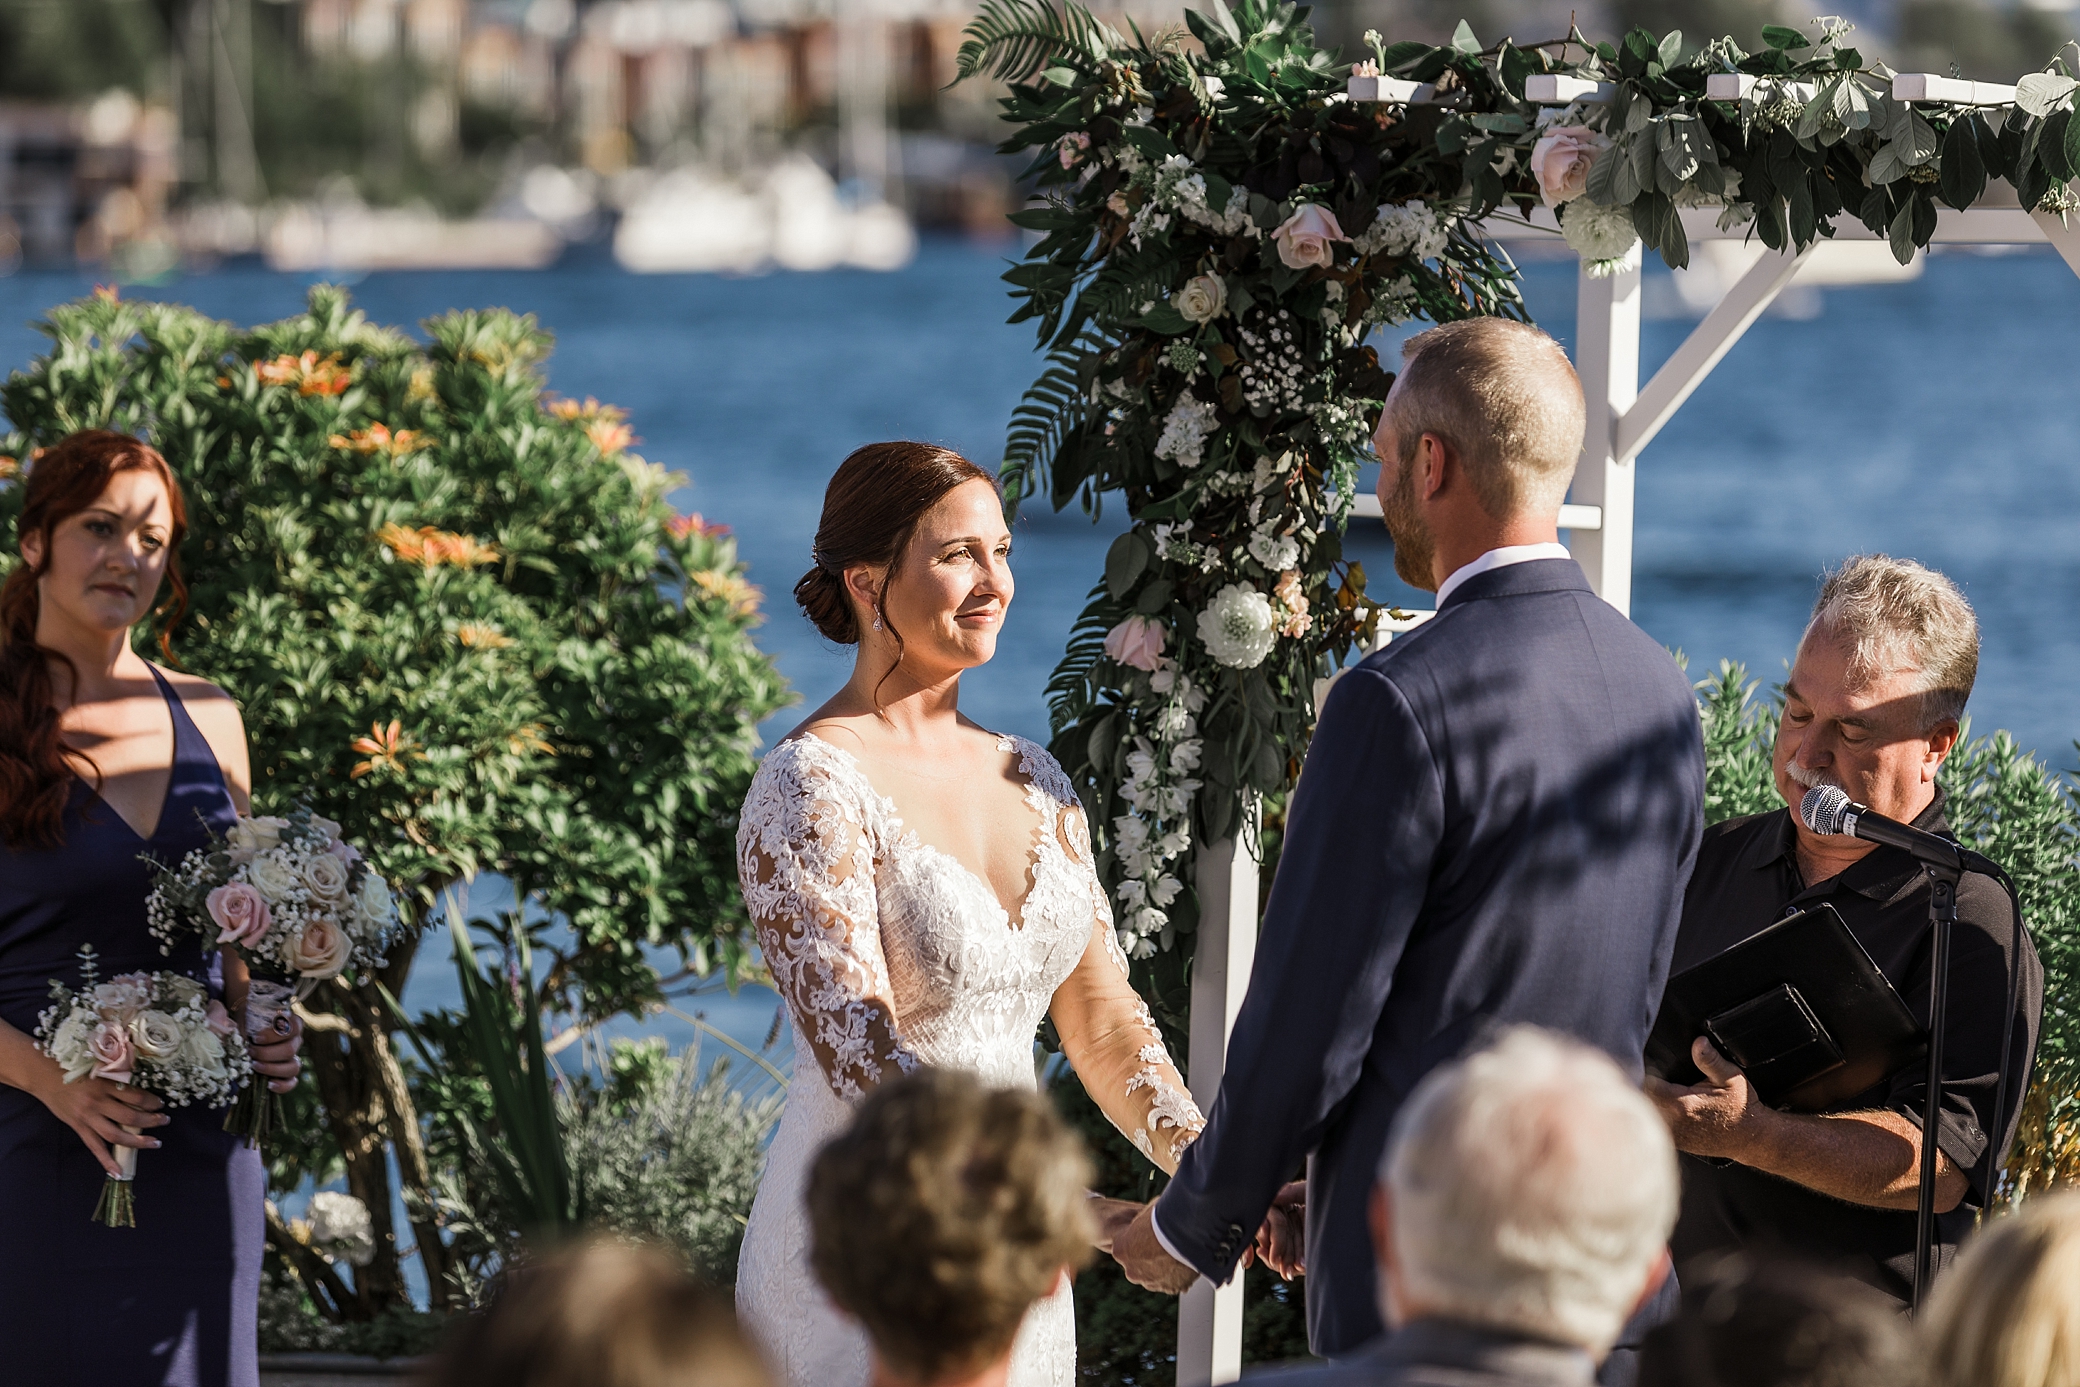 Seattle waterfront wedding ceremony at MV Skansonia wedding venue | Megan Montalvo Photography 